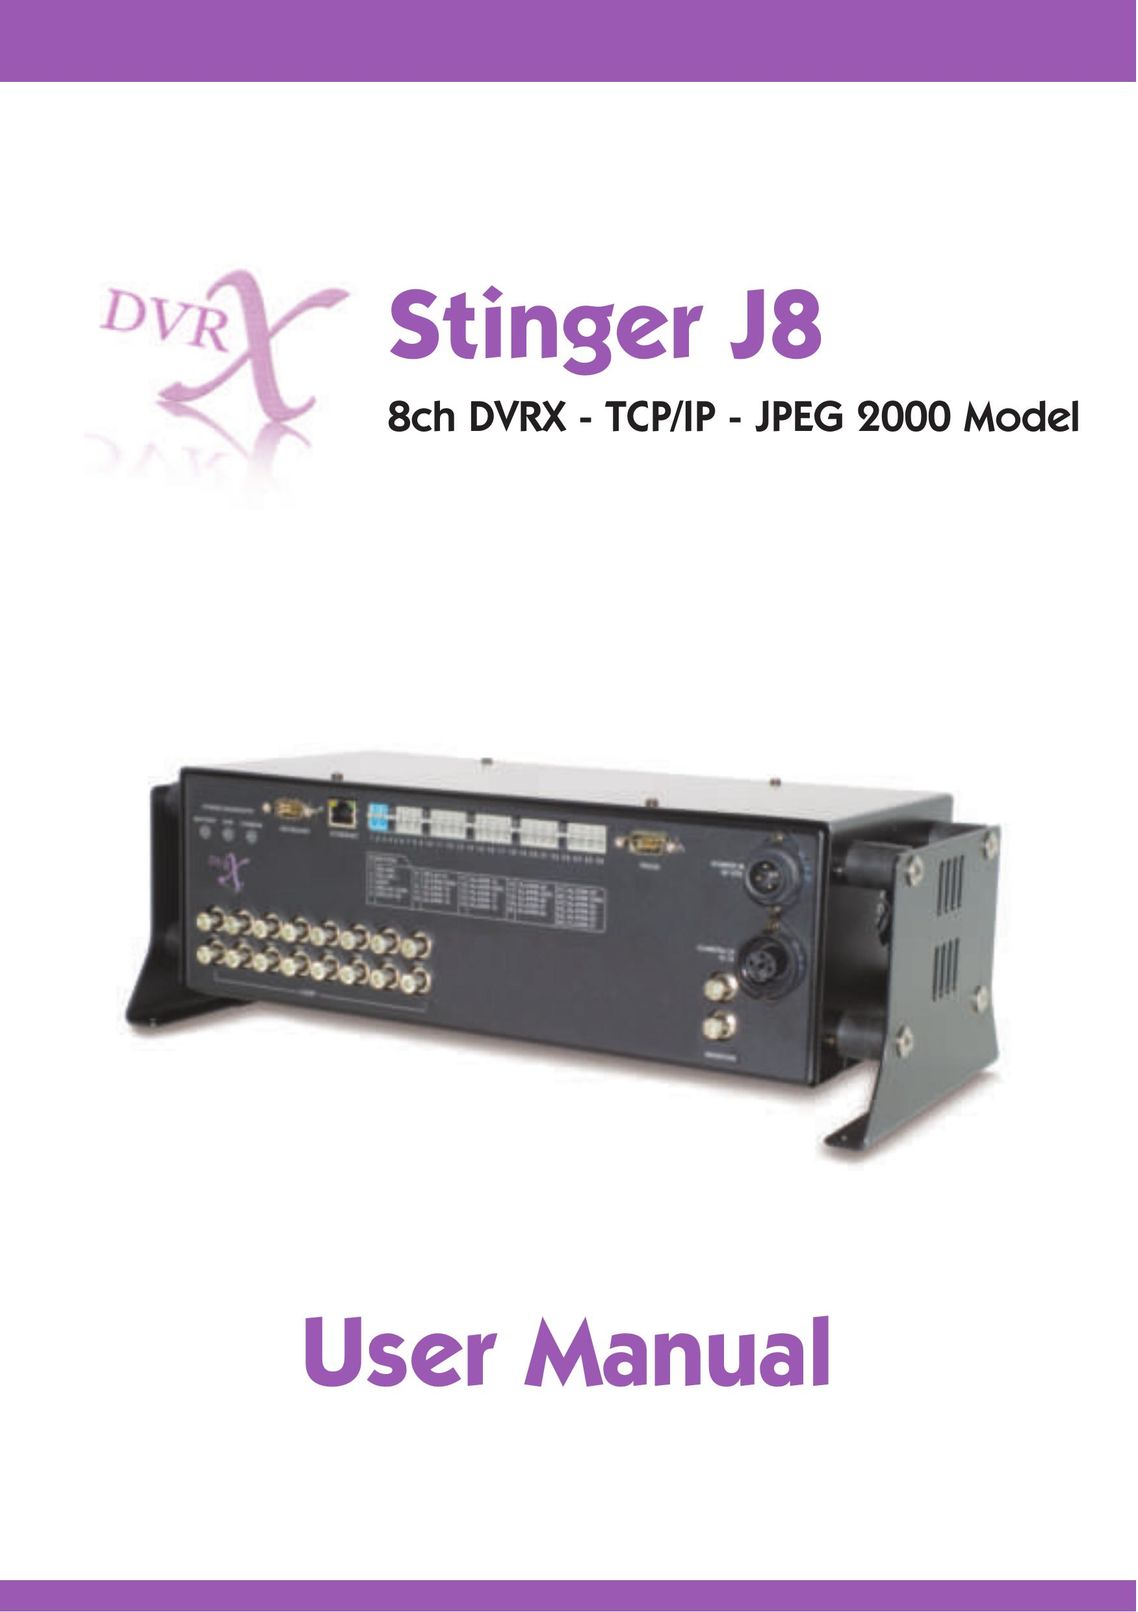 Stinger JPEG 2000 DVR User Manual